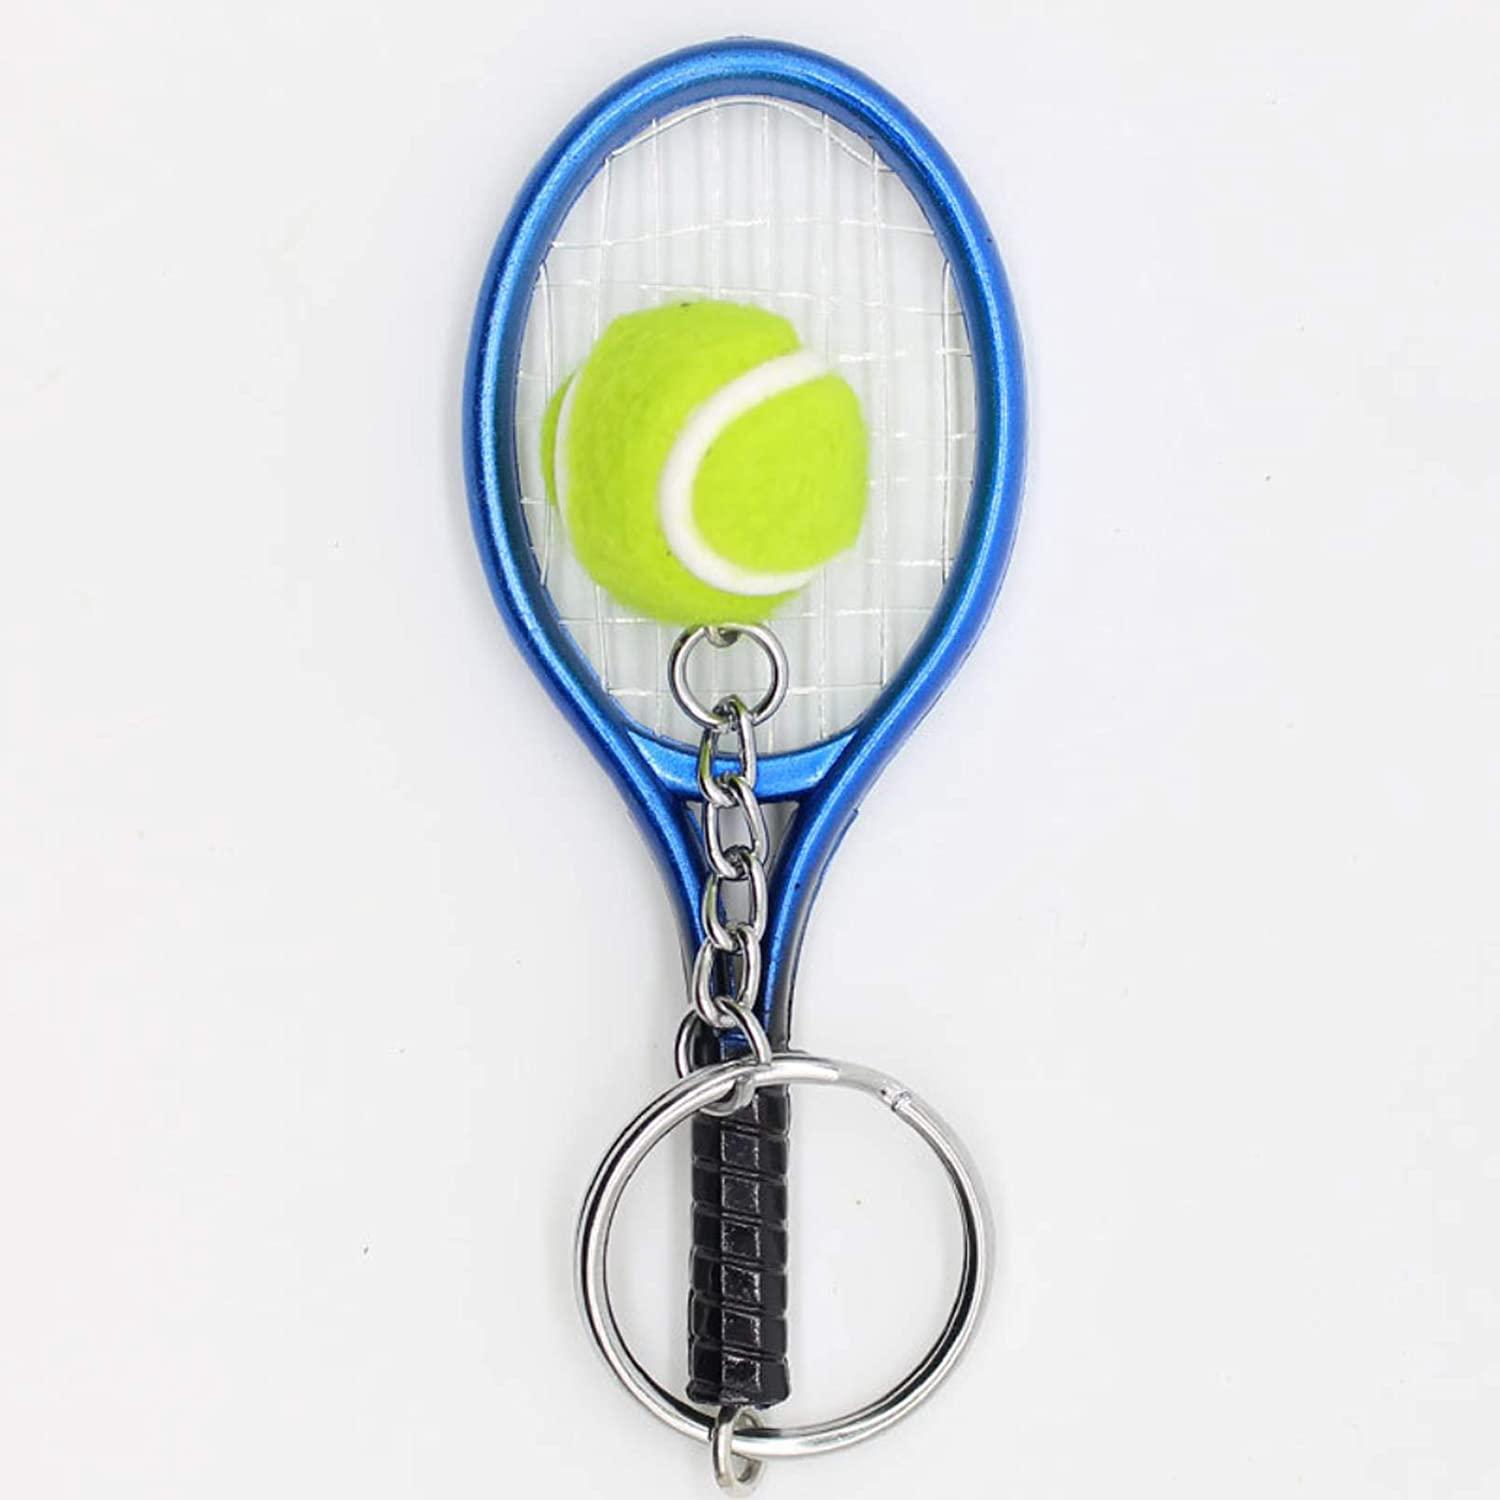 Tennis racket keychain